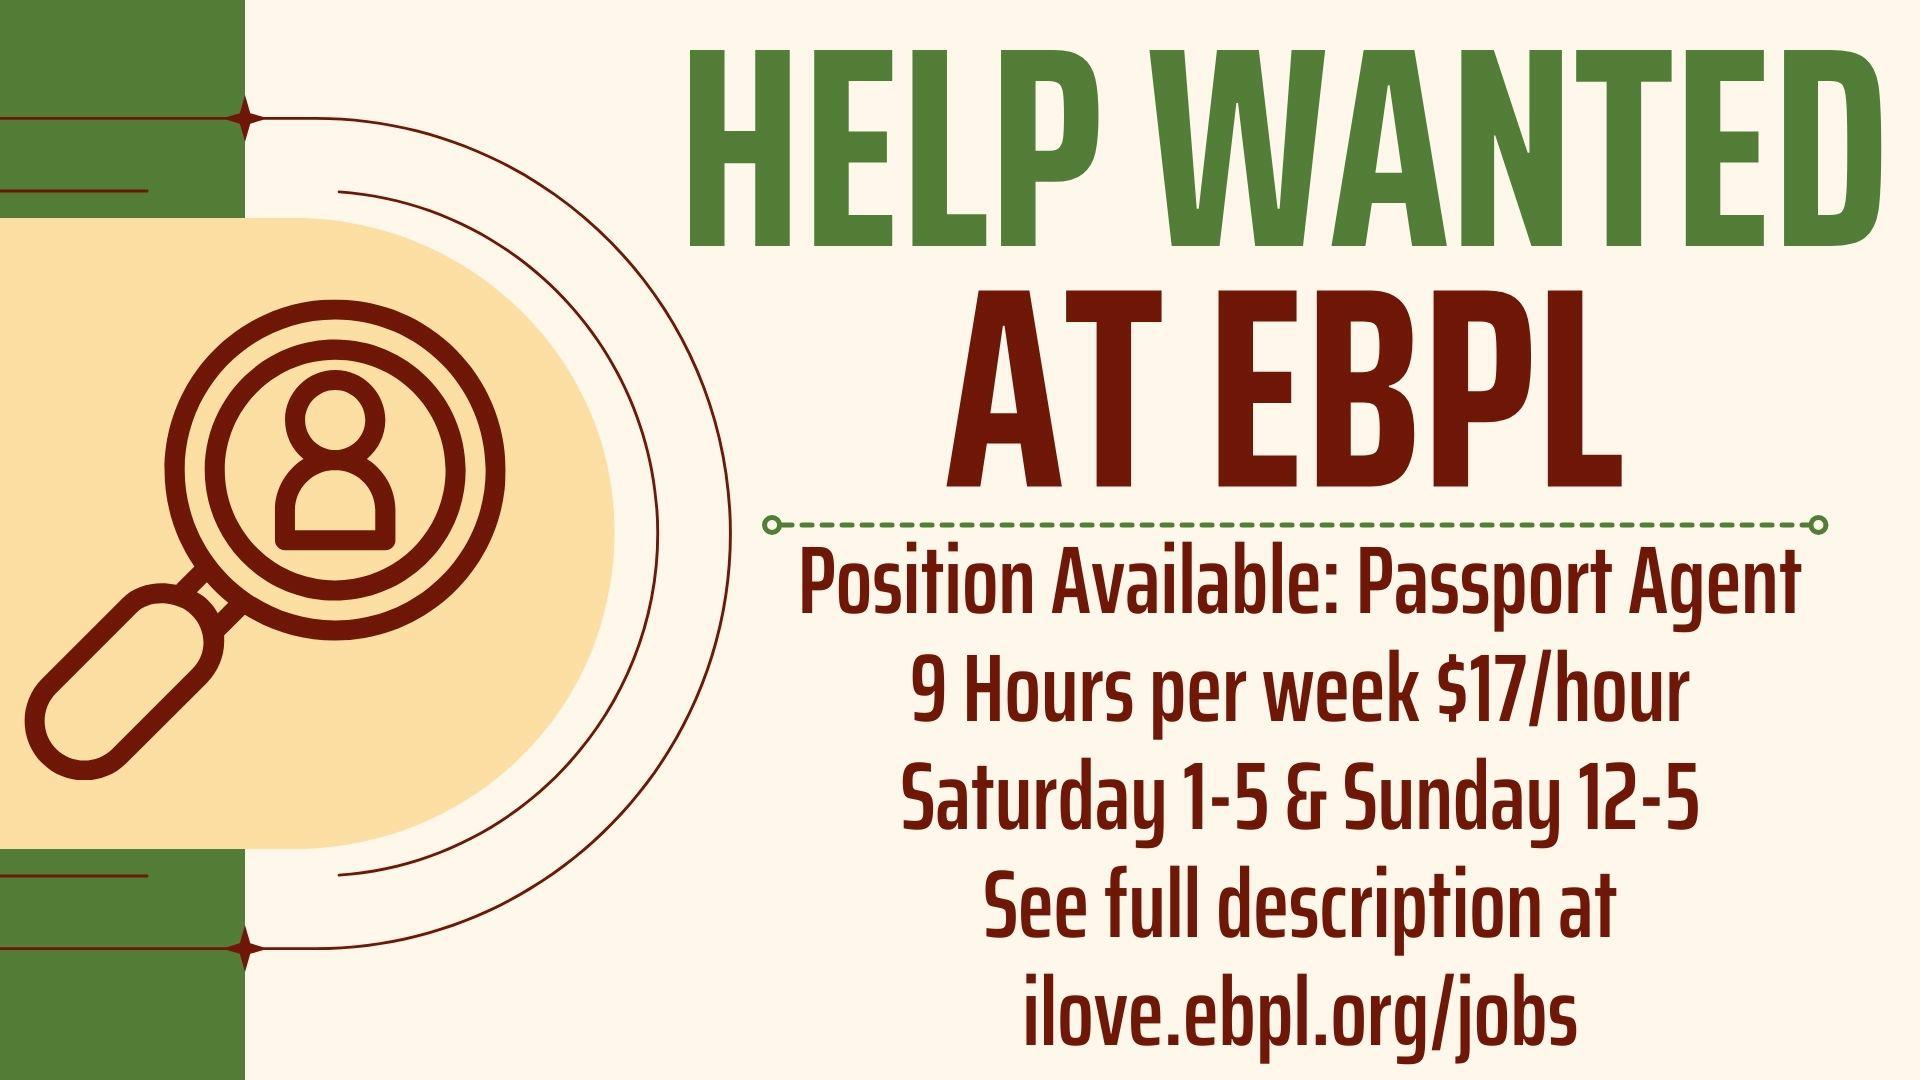 Help Wanted at EBPL